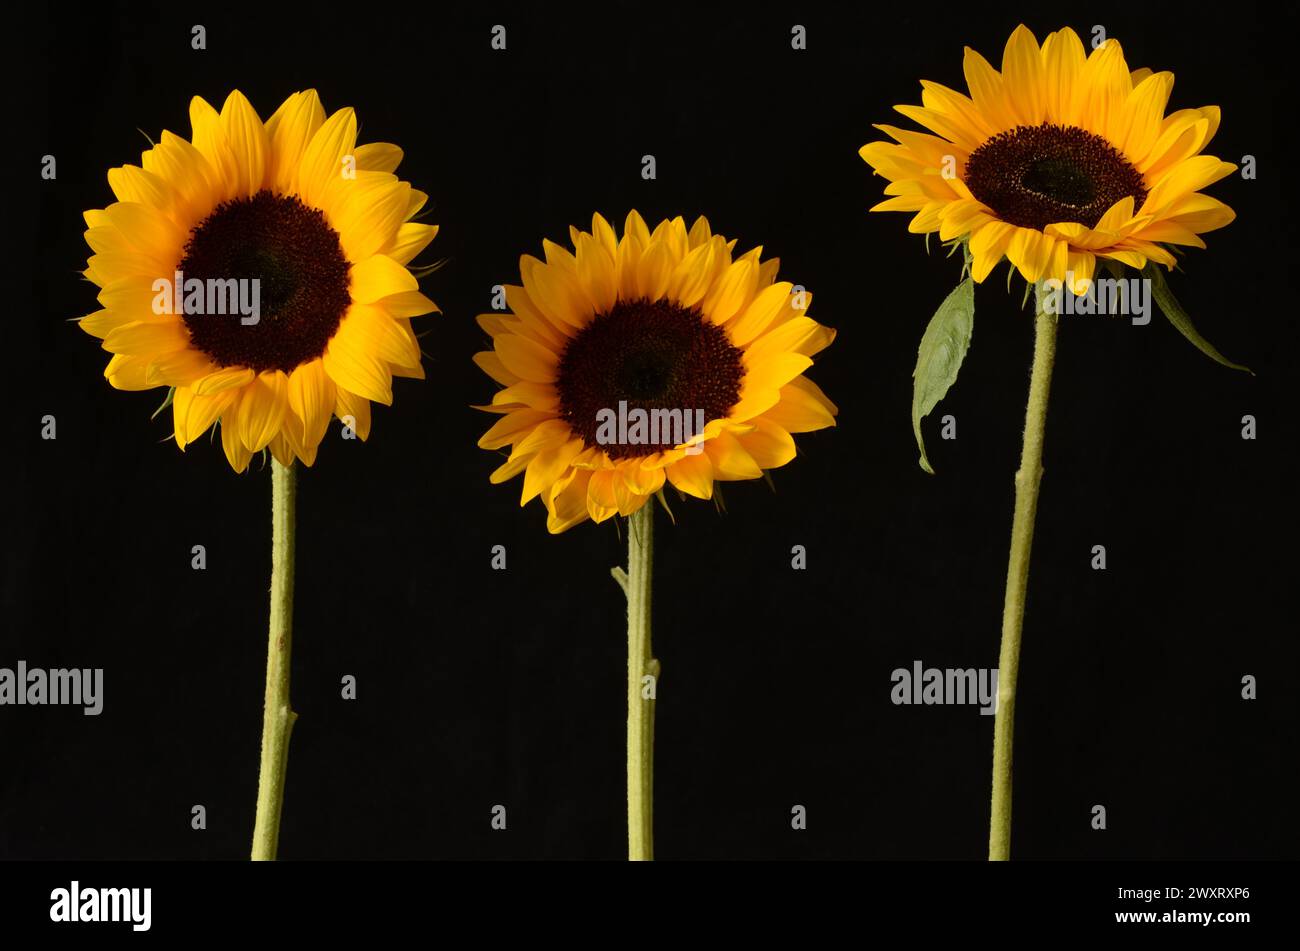 Three yellow sunflowers on a black background. Mabye night. Stock Photo